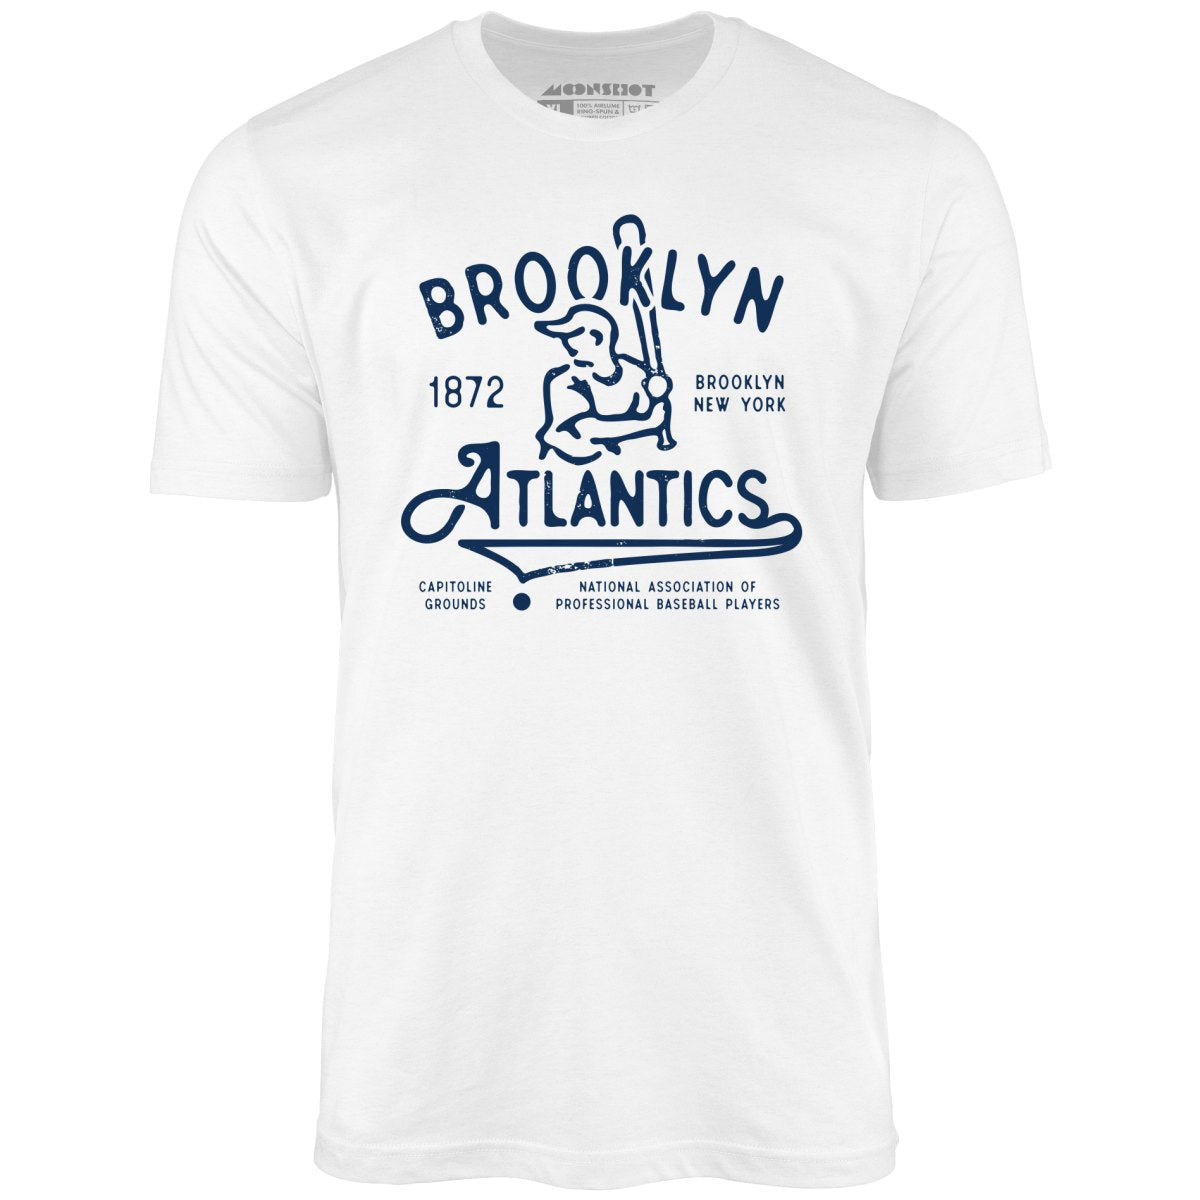 Brooklyn Atlantics - New York - Vintage Defunct Baseball Teams - Unisex T-Shirt